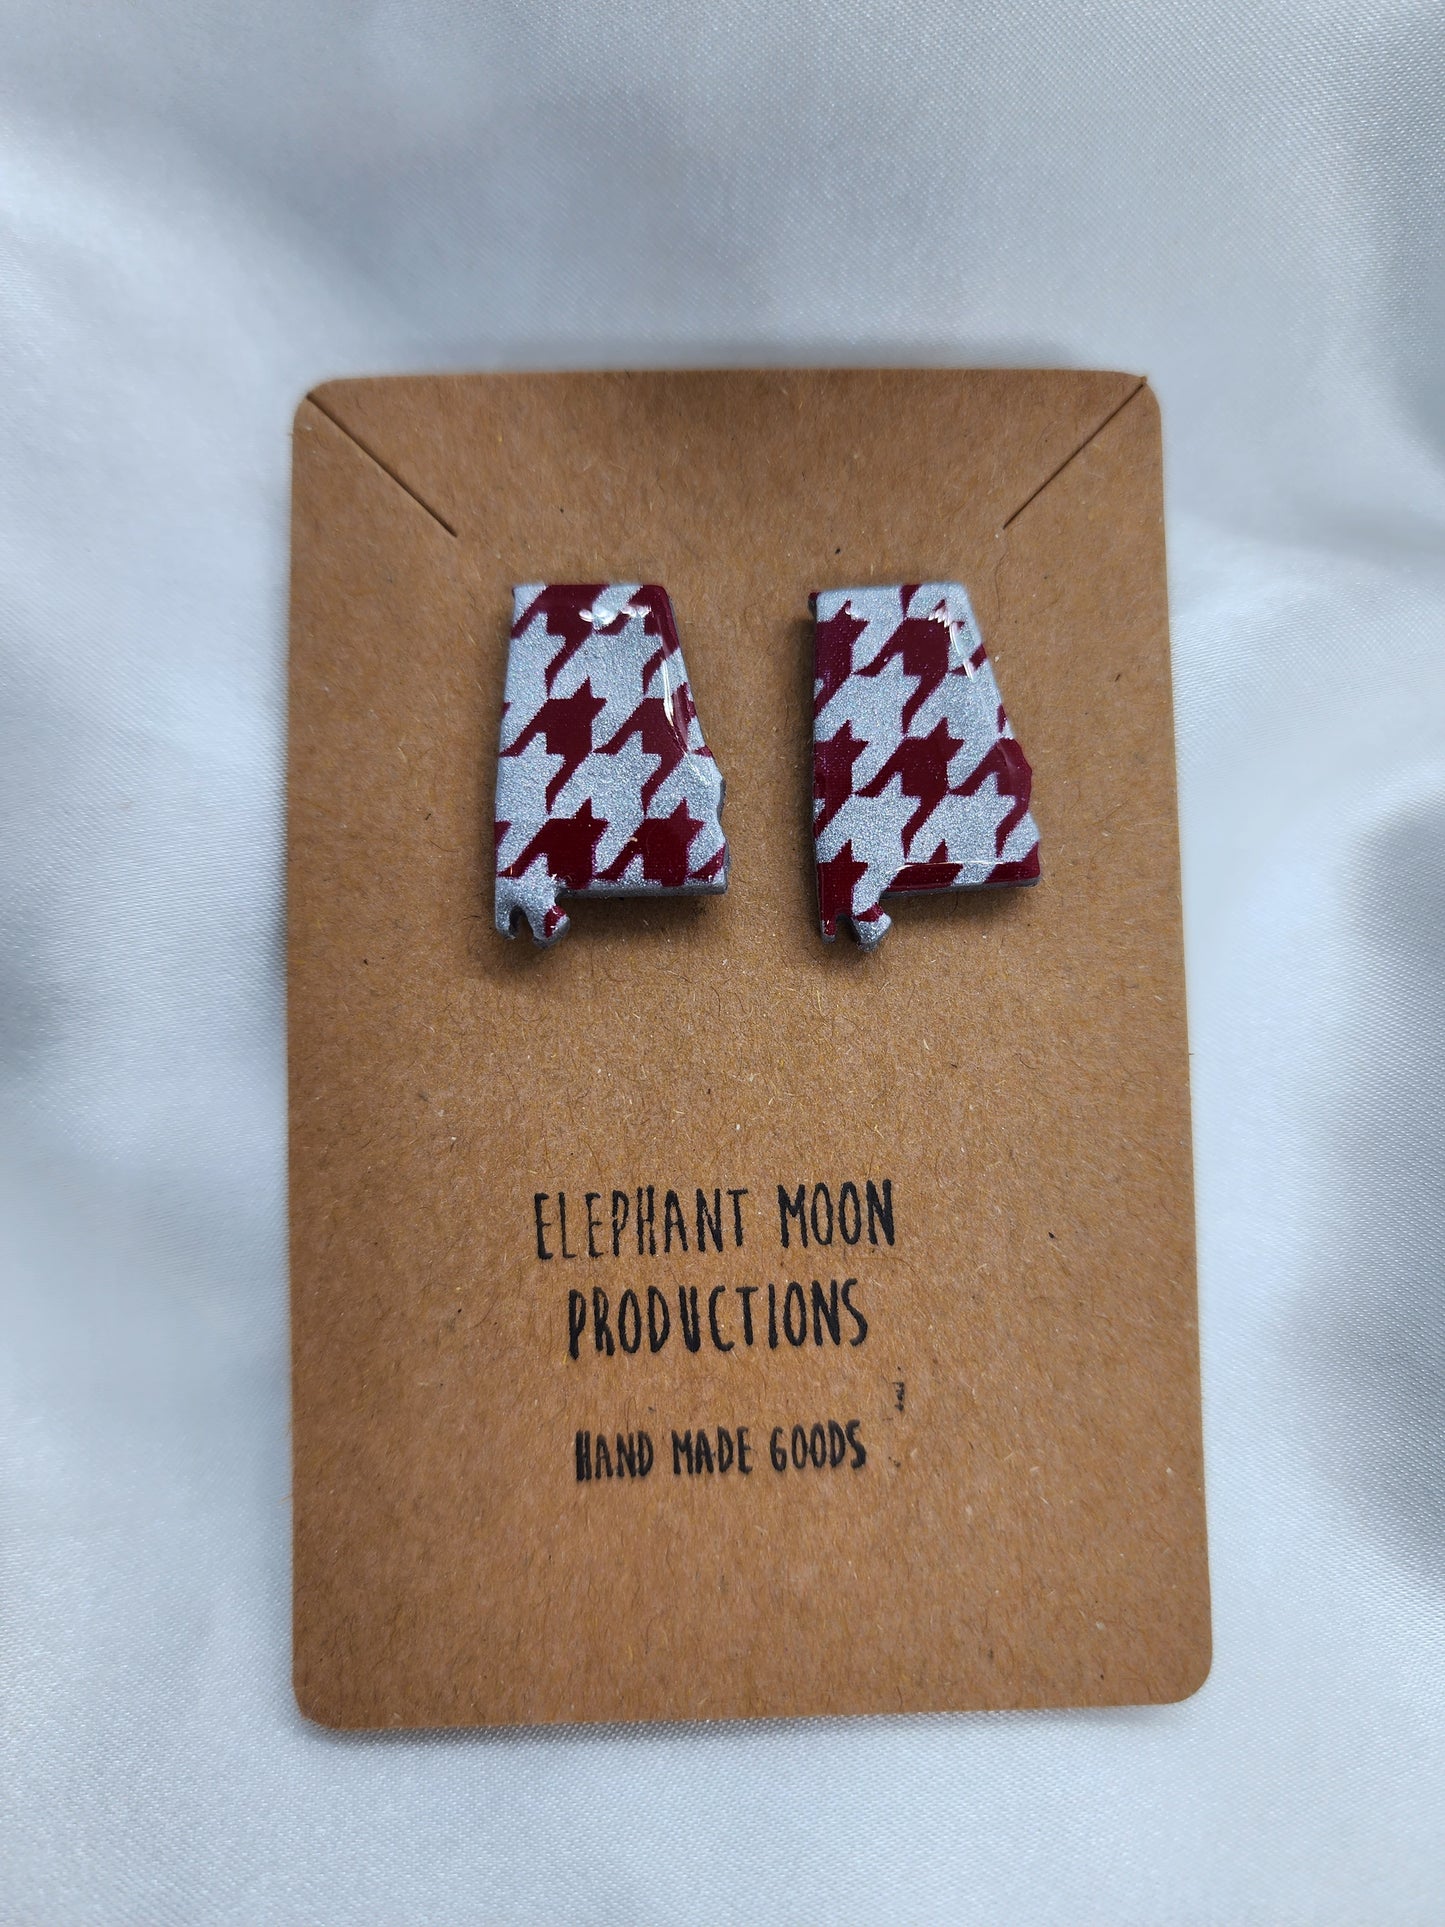 Alabama Houndstooth Stud Earrings Handmade Hypoallergenic